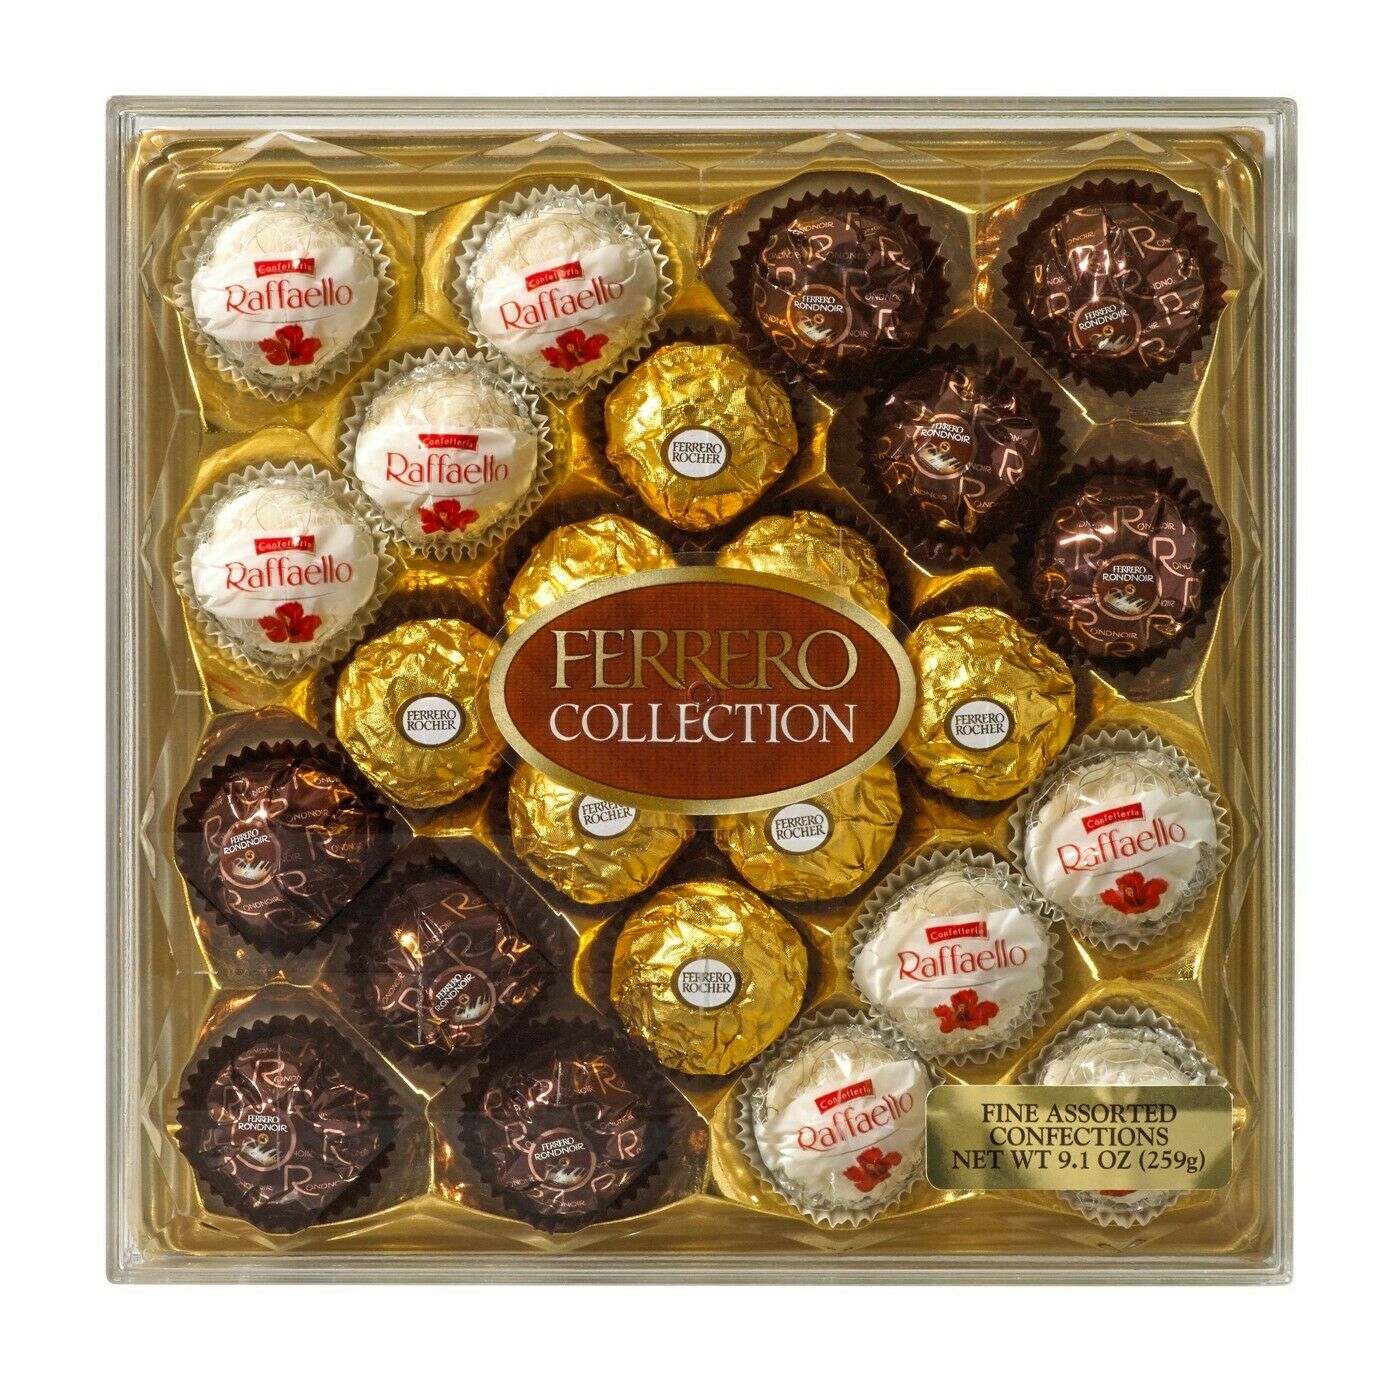 Ferrero Collection Fine Assorted Confections, 9.1oz